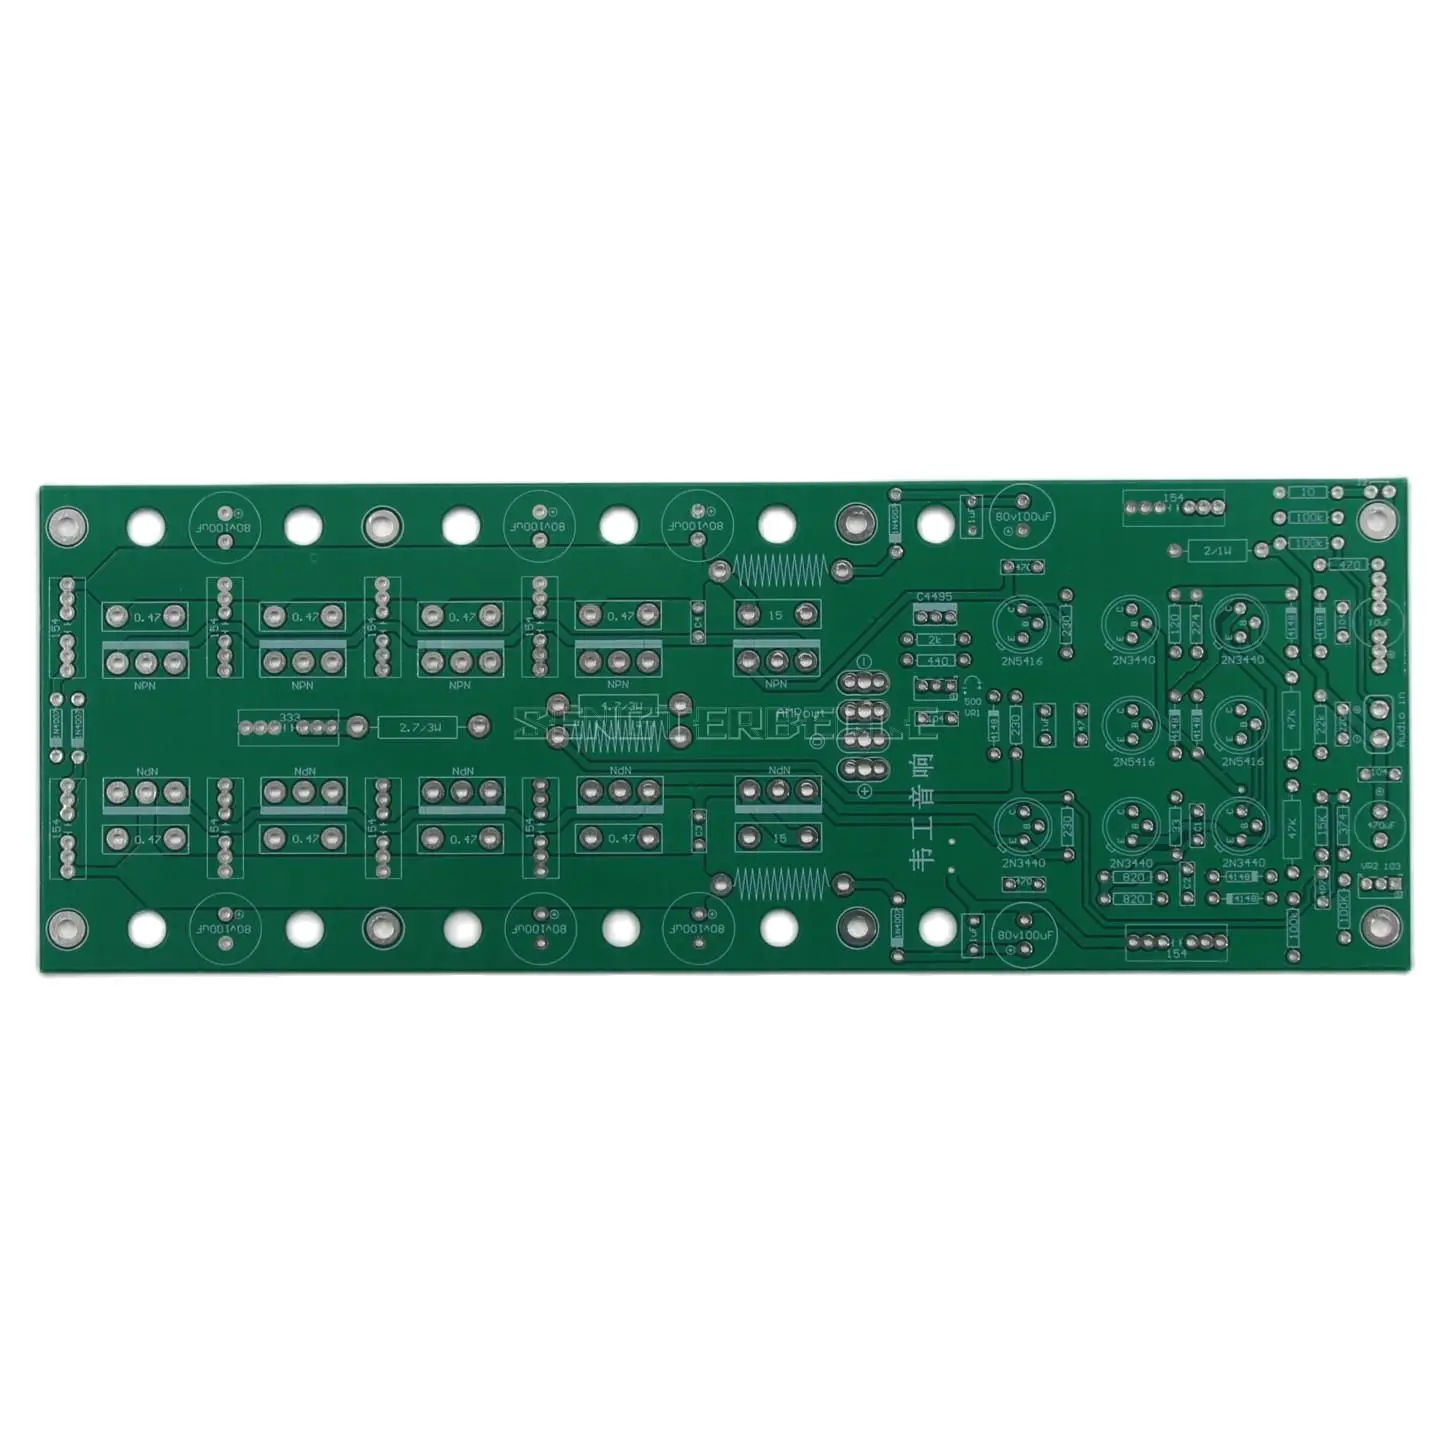 

HiFi High Power Mono 300W Home Audio Amplifier Board PCB Based onClassic FM711 Amp Circuit